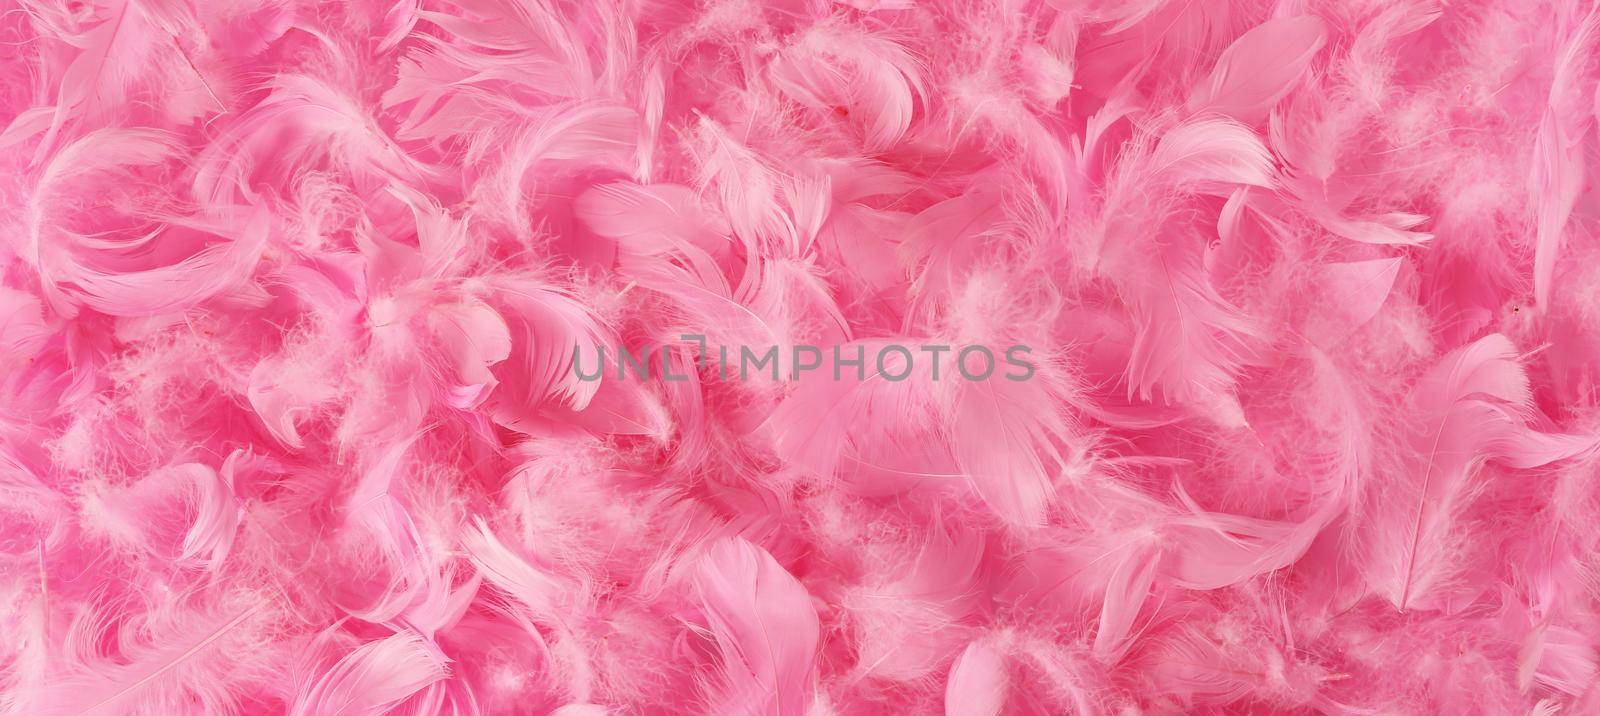 beautiful pink feathers. by NelliPolk